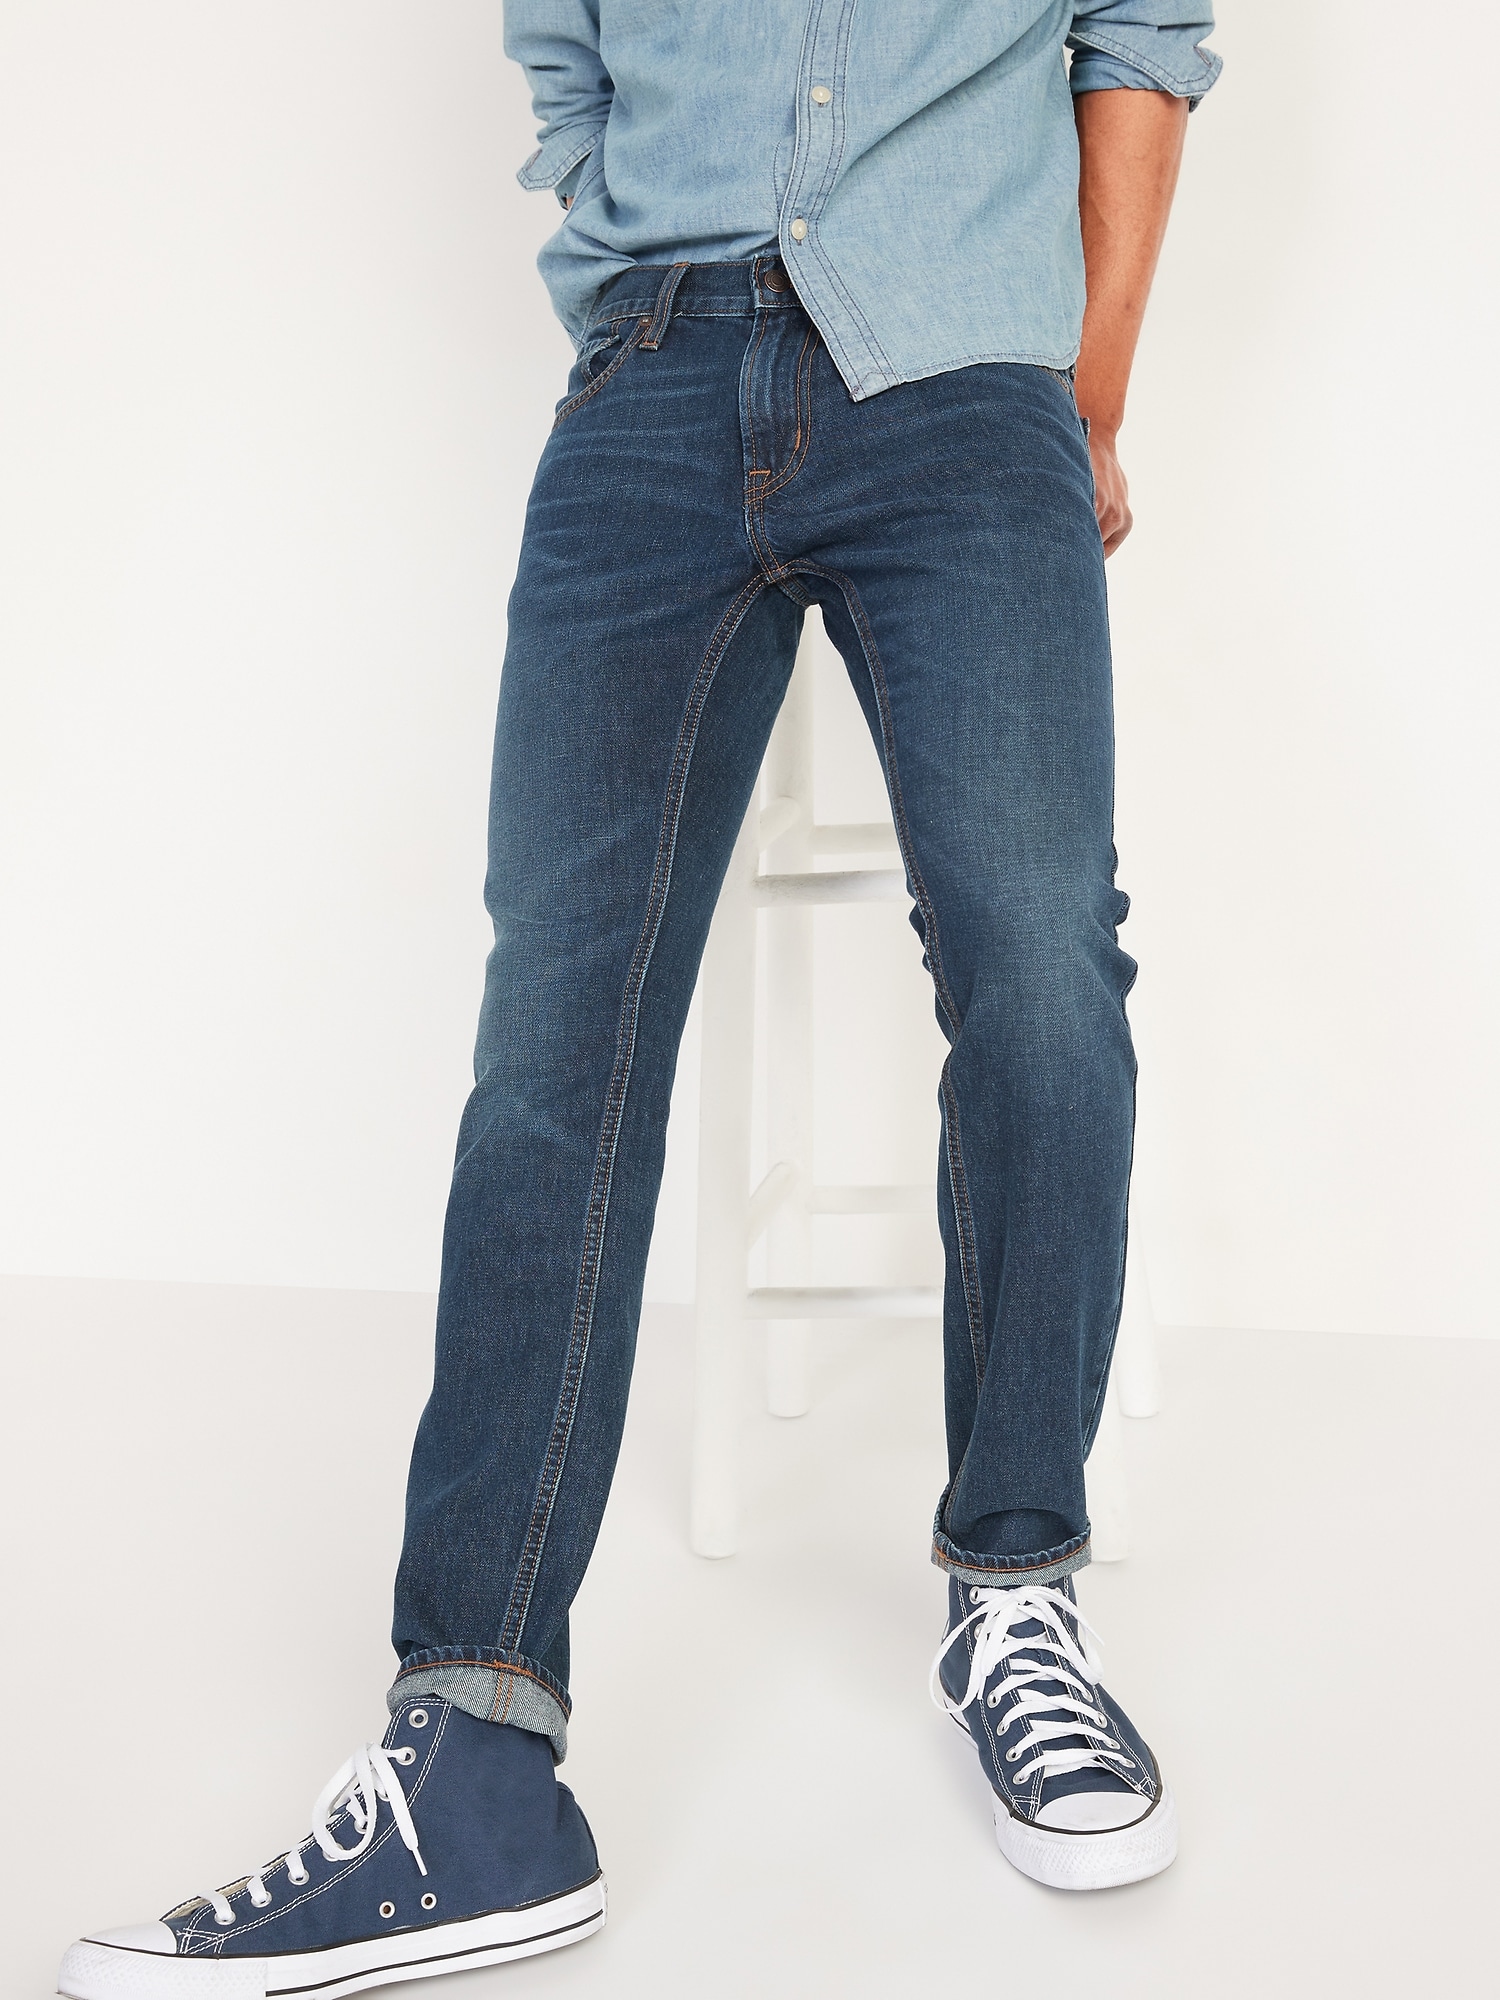 Skinny Dark-Wash Non-Stretch Jeans for Men